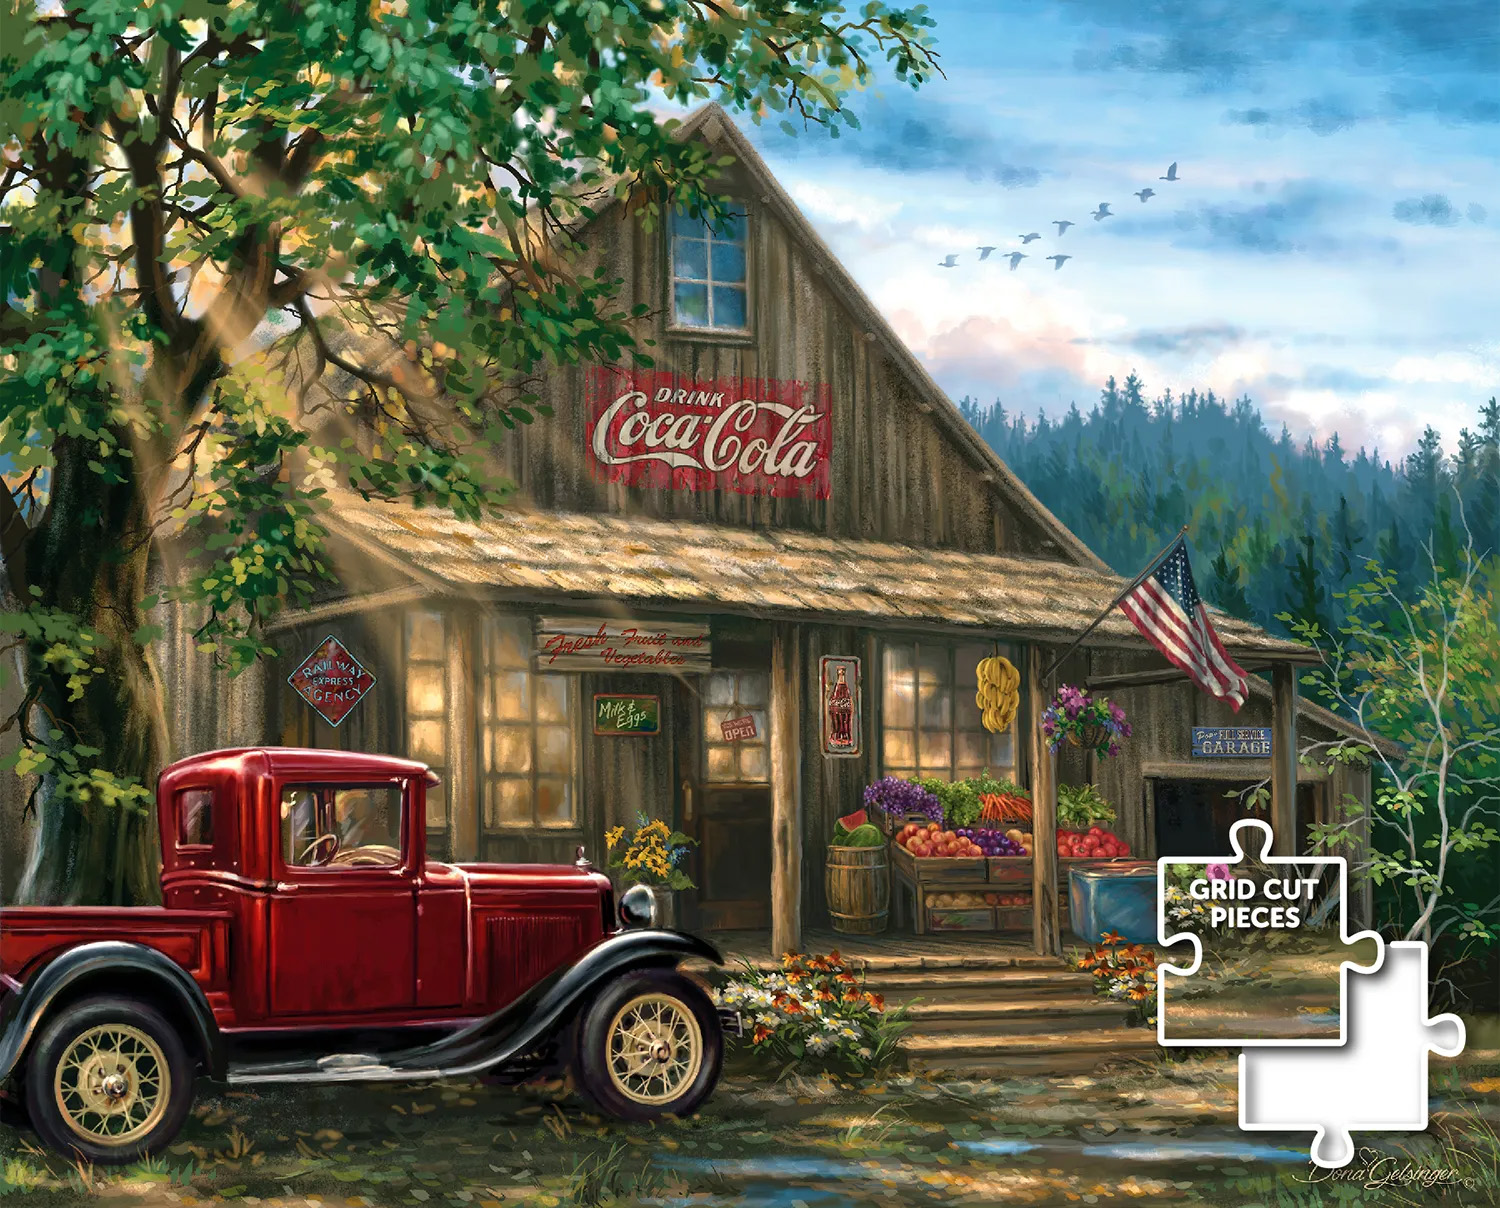 Country General Store Nostalgic & Retro Jigsaw Puzzle